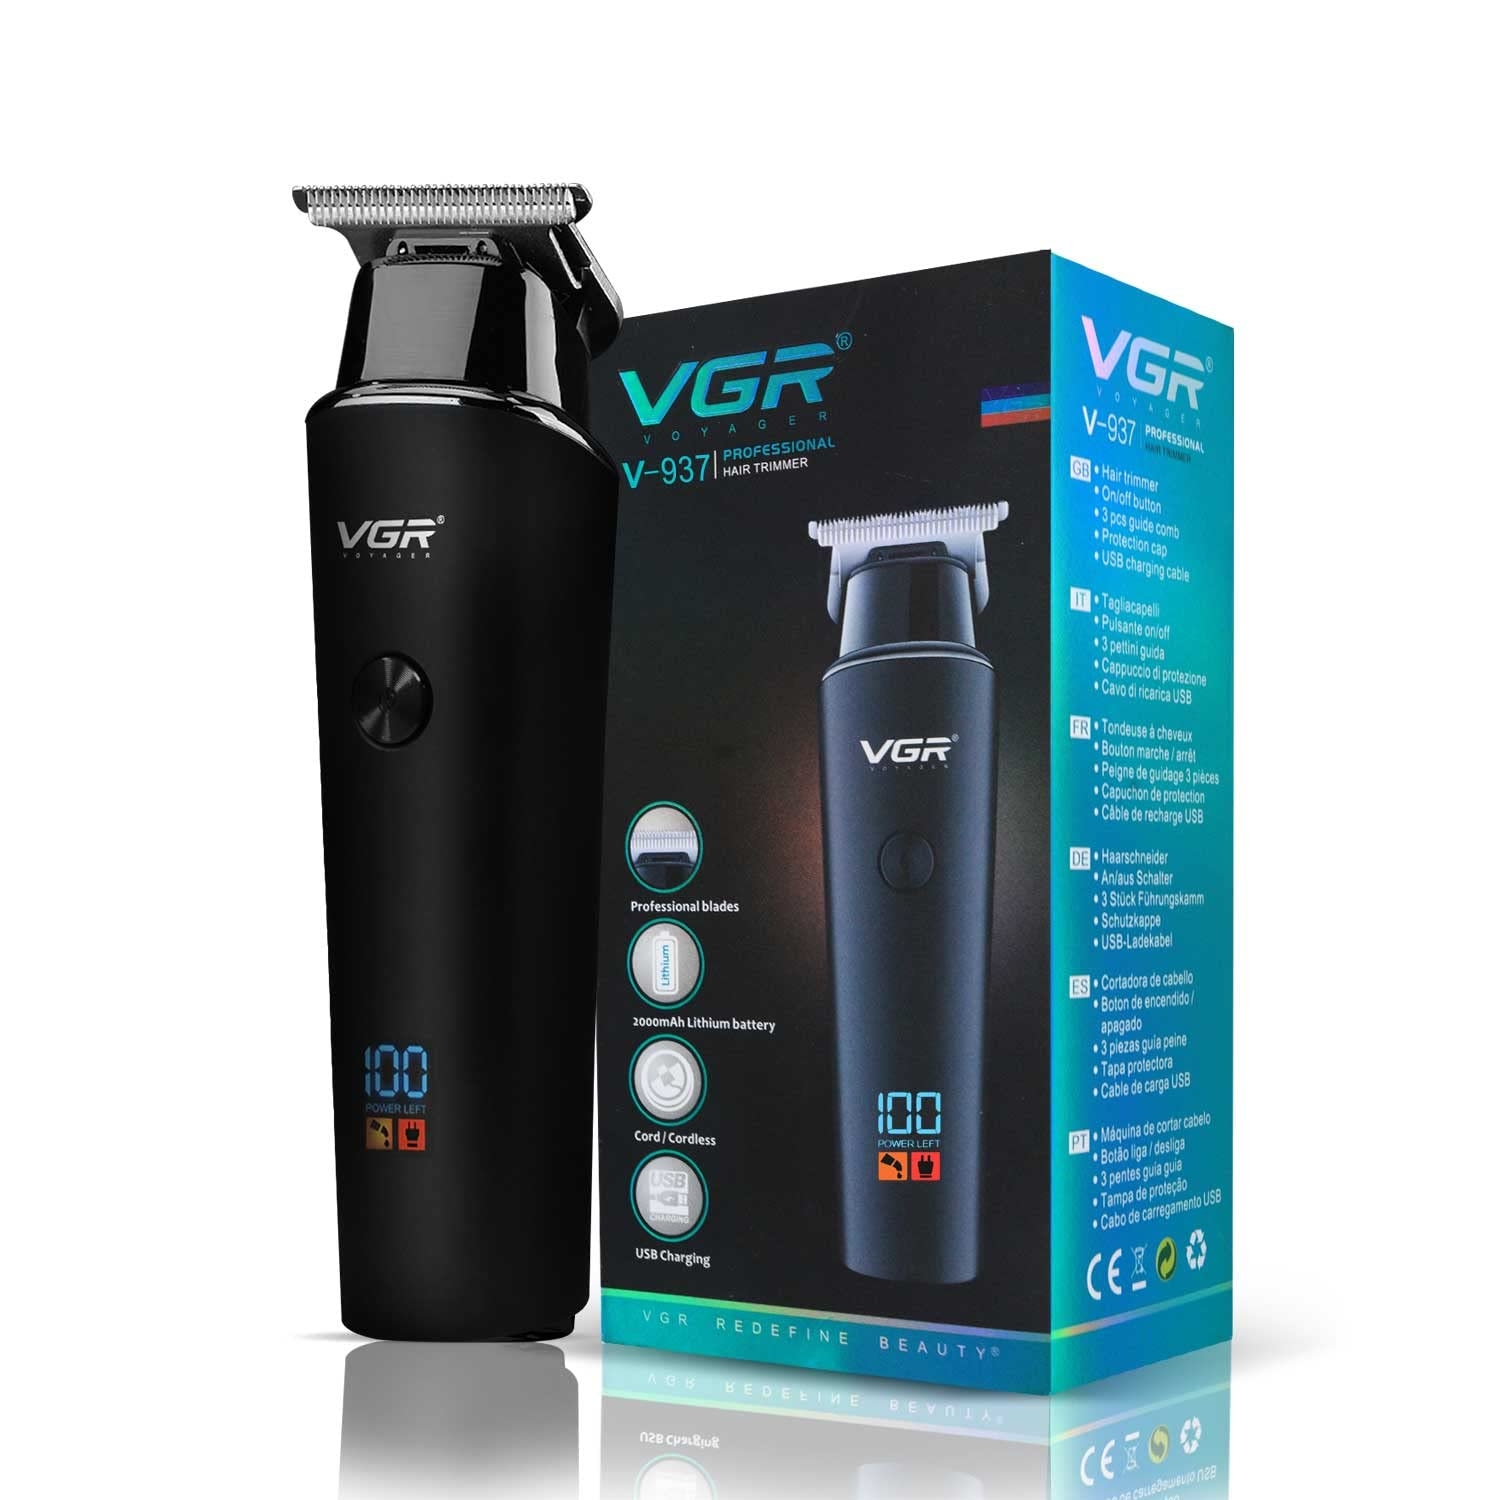 VGR V-937 Professional Corded & Cordless Hair Trimmer